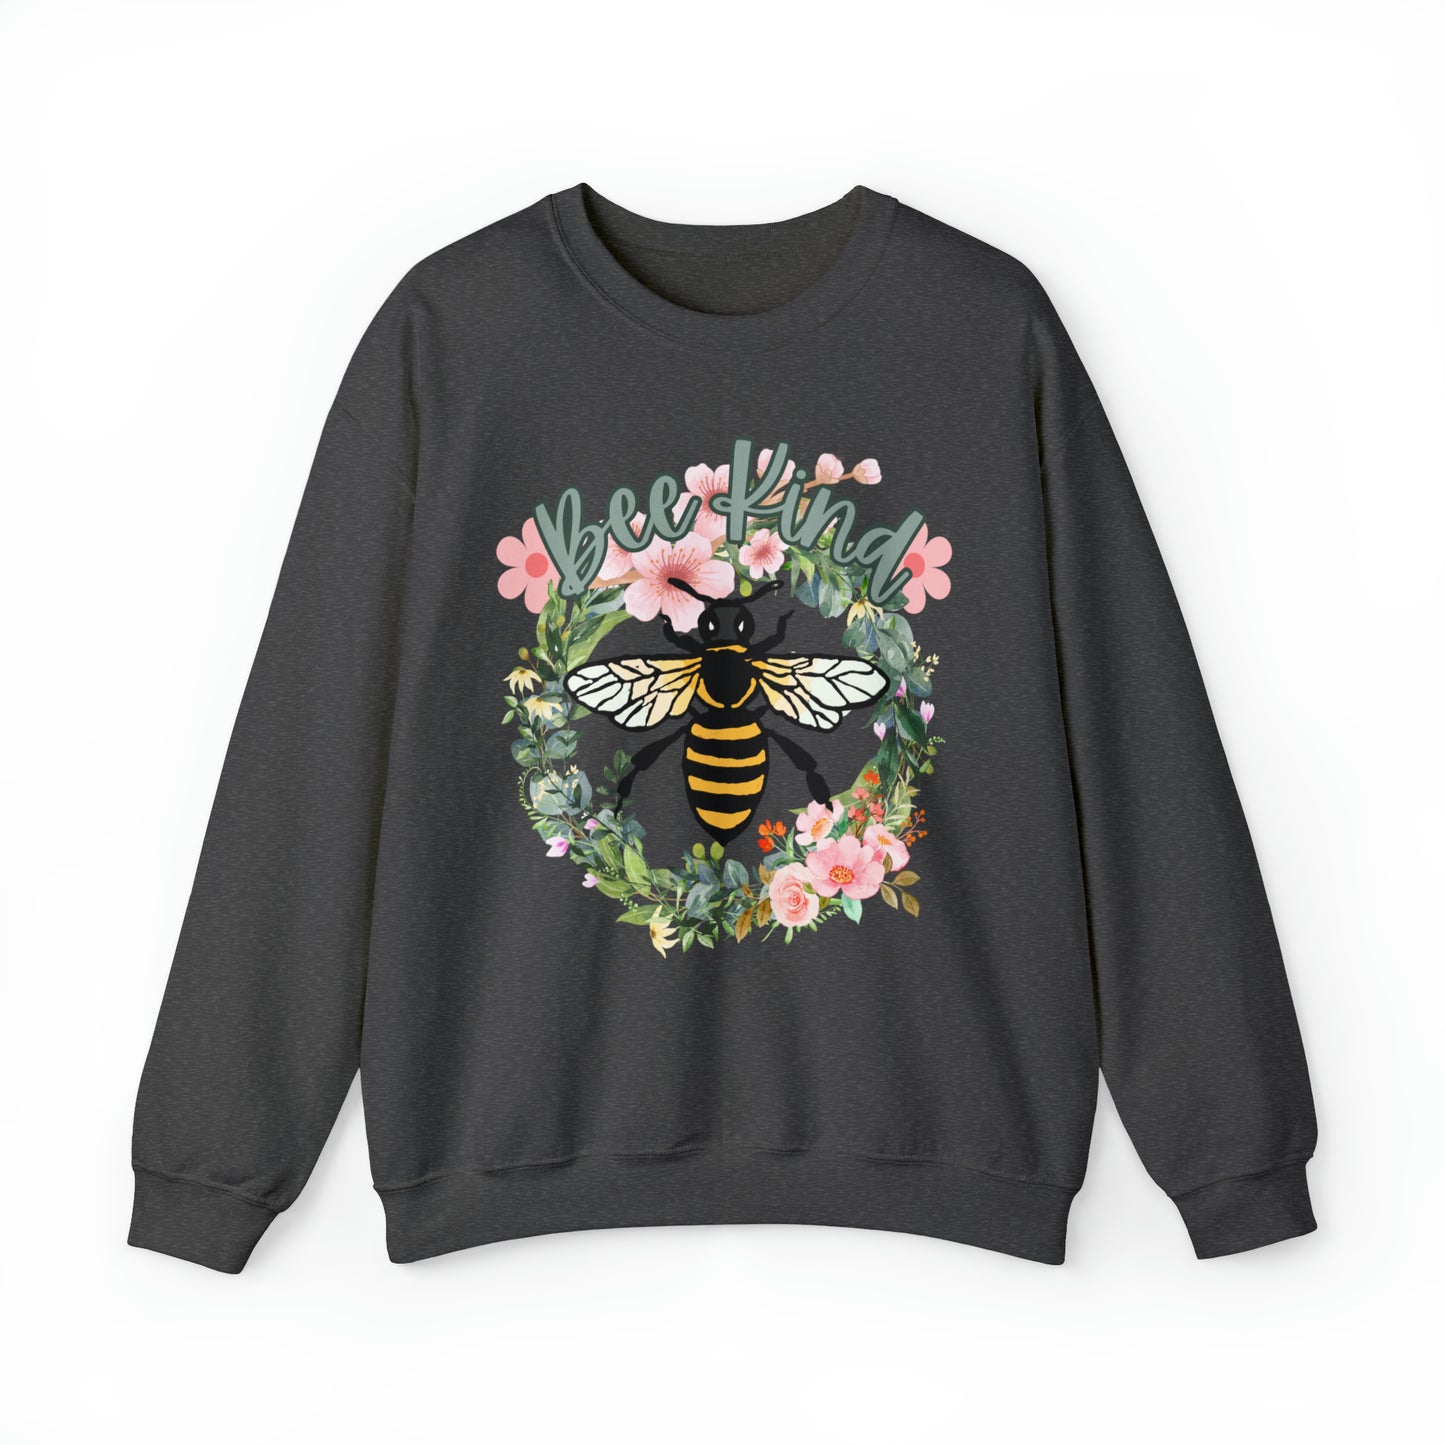 Adult "Bee Kind" Unisex Heavy Blend Crewneck Sweatshirt